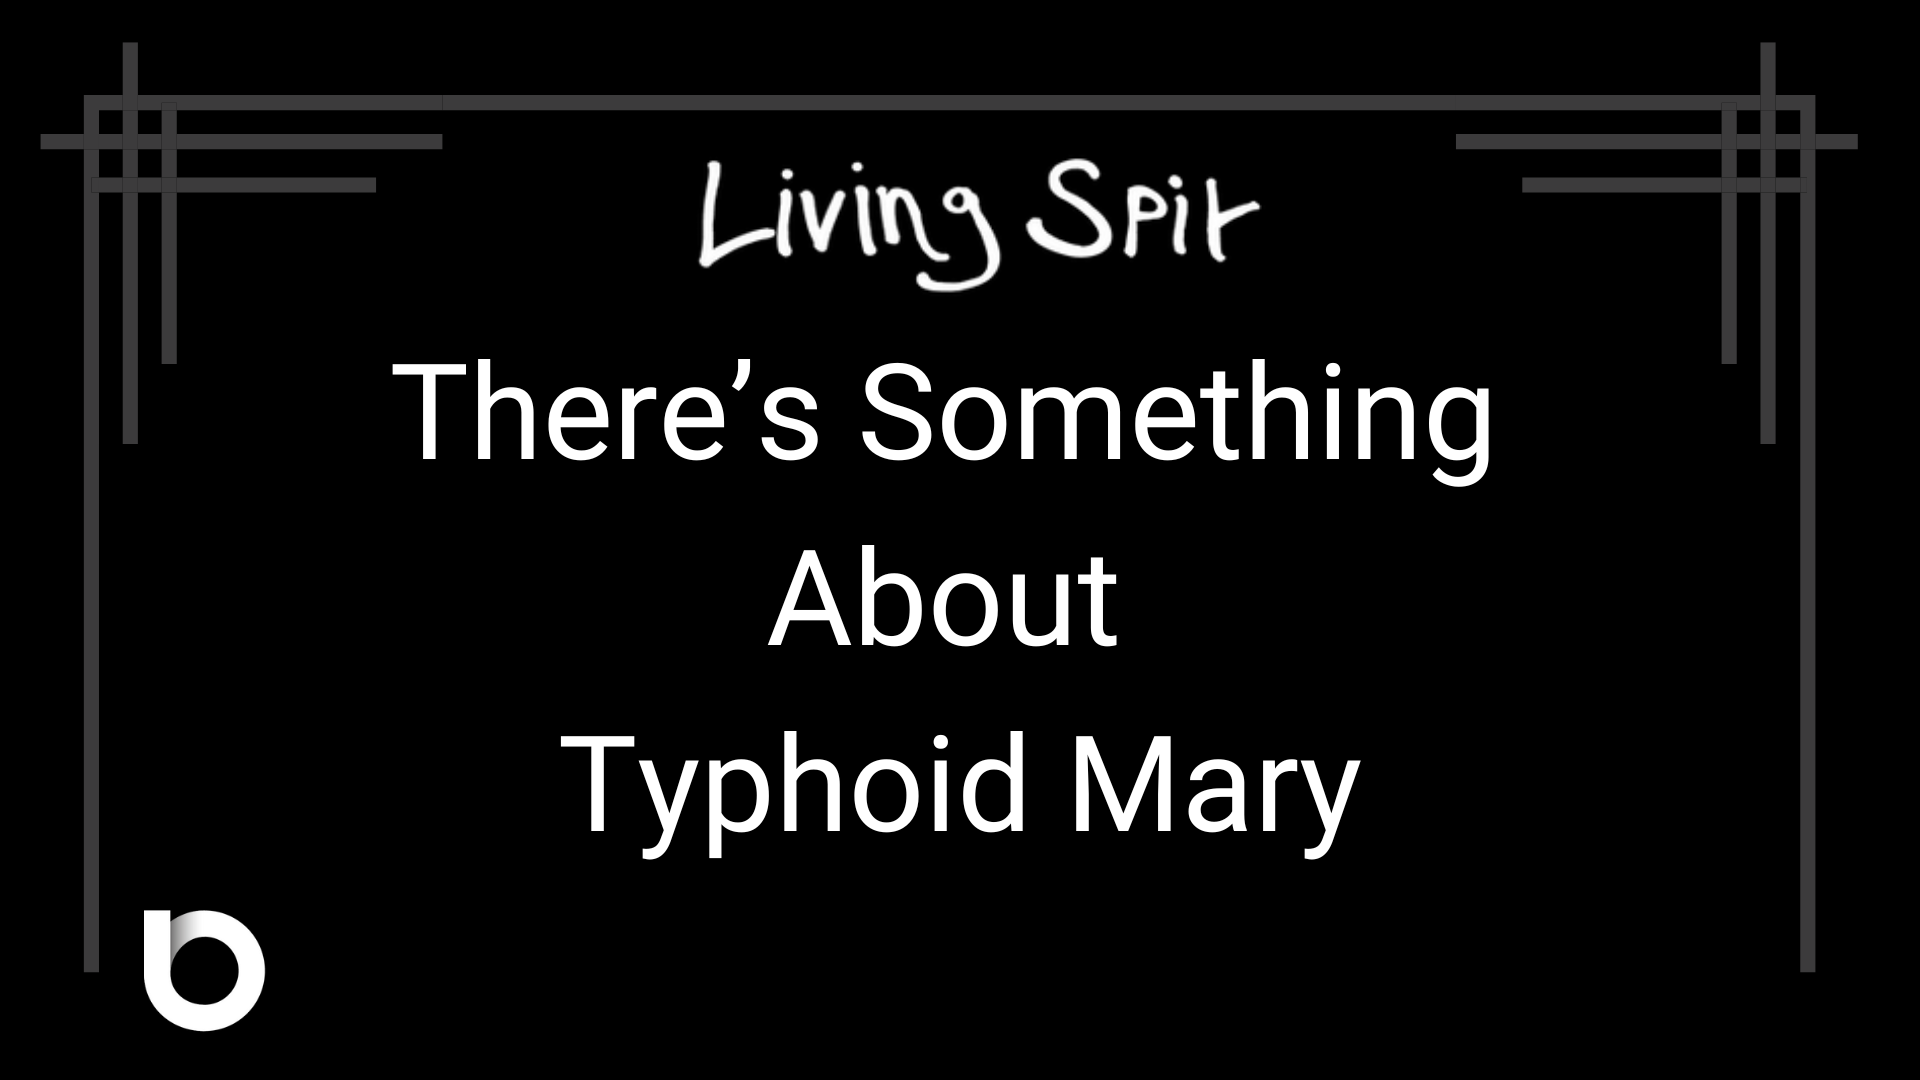 Typhoid Mary temporary imagery